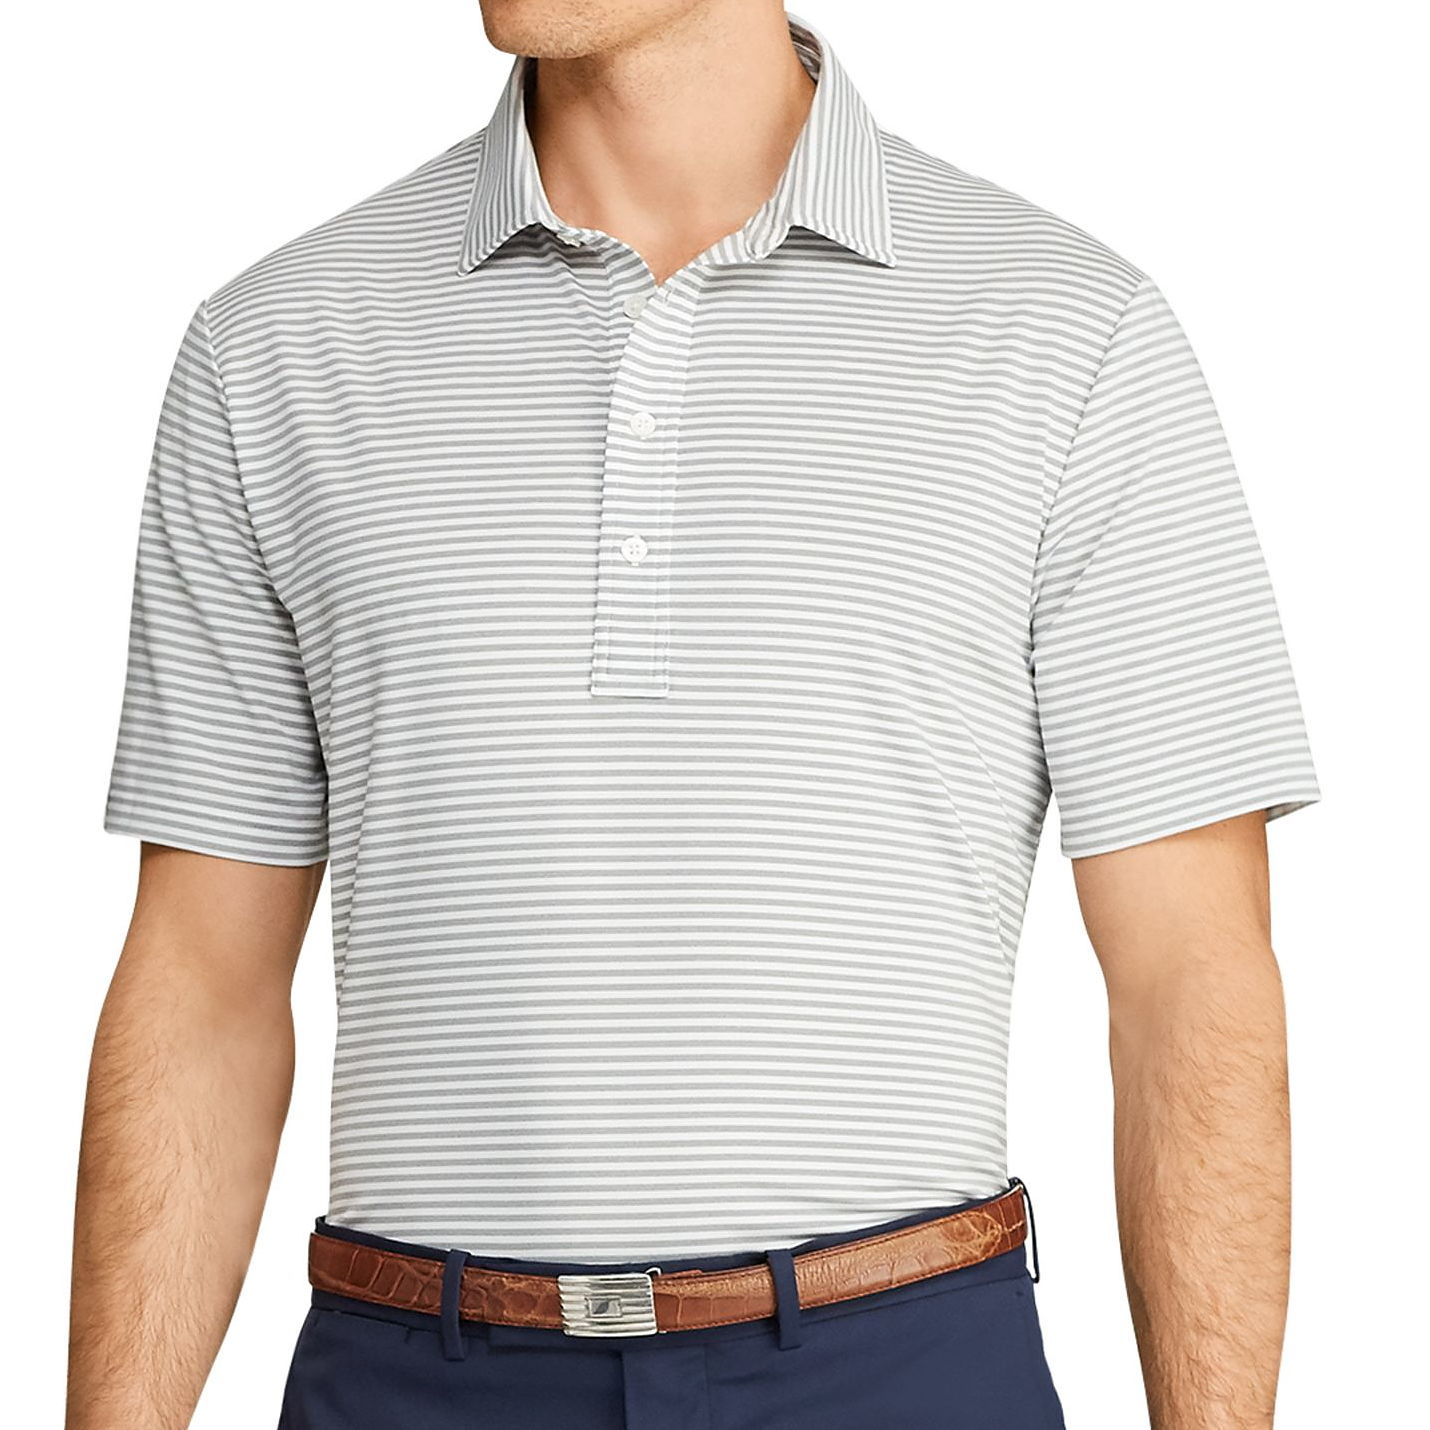 RLX Golf Ralph Lauren Mens Striped Moisture Wicking Polo Shirt (Large, Grey) - image 1 of 2